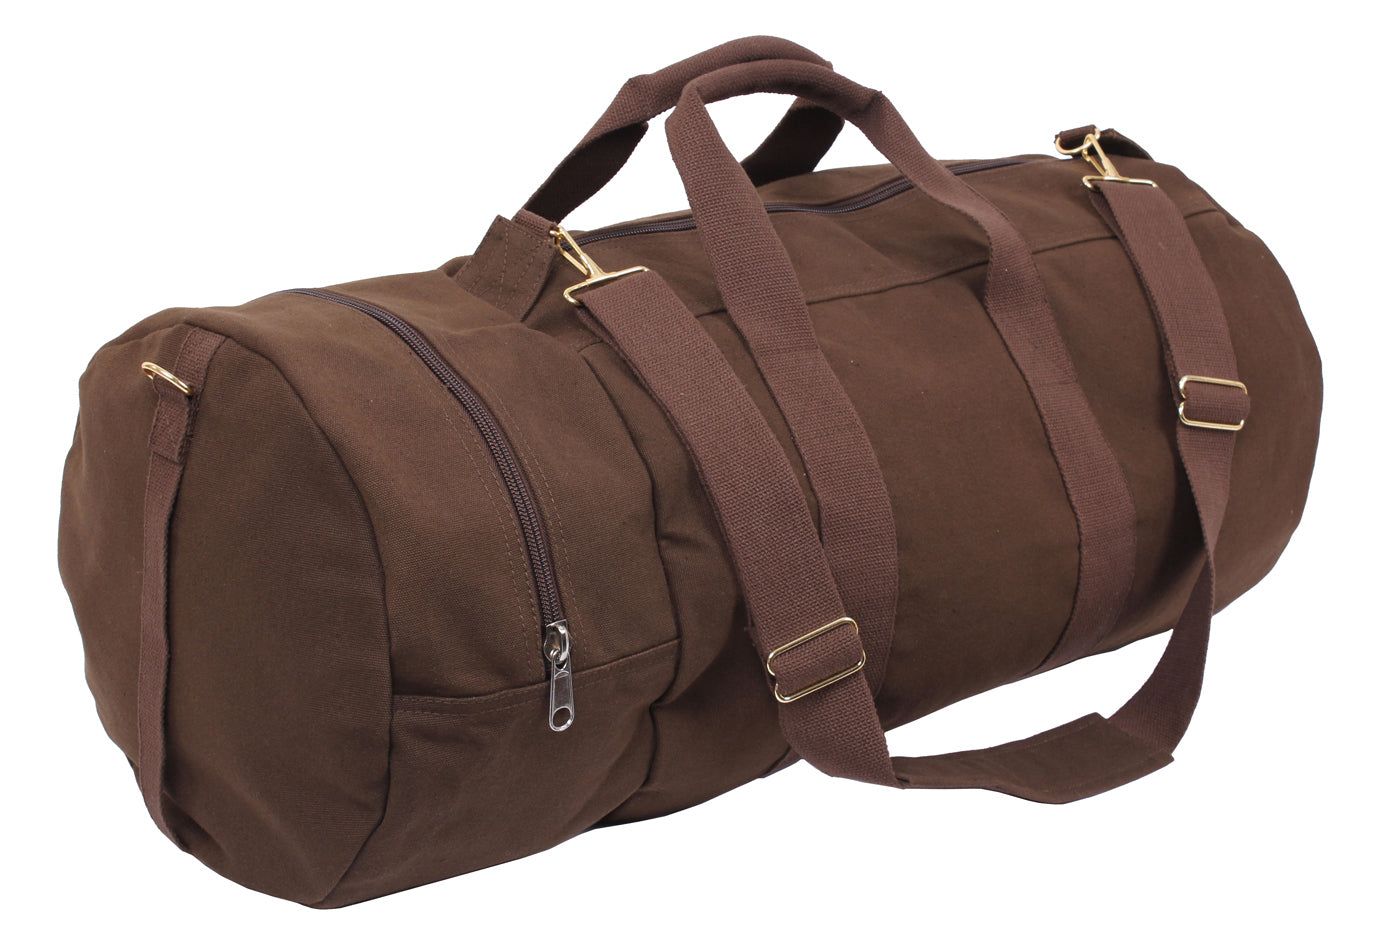 Milspec Canvas Double-Ender Sports Bag Messenger & Shoulder Bags MilTac Tactical Military Outdoor Gear Australia